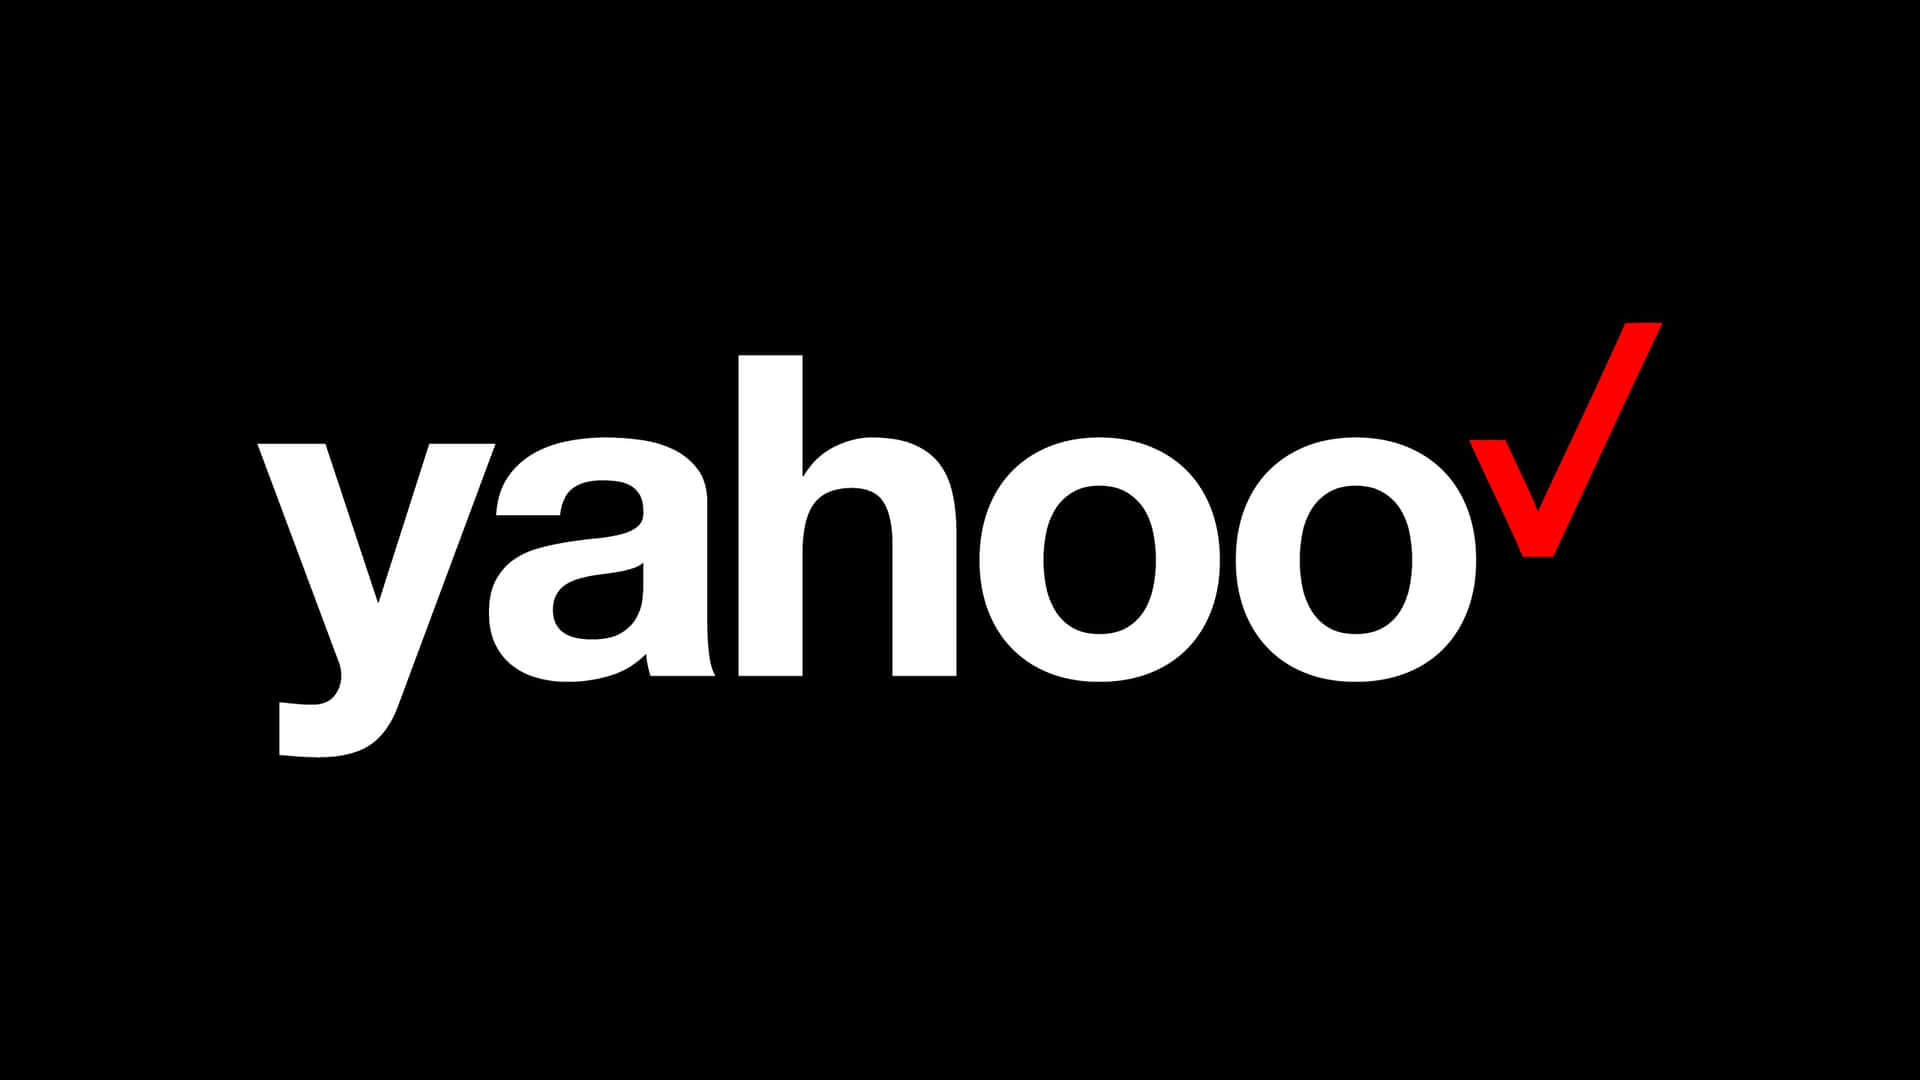 Yahoo Desktop Background